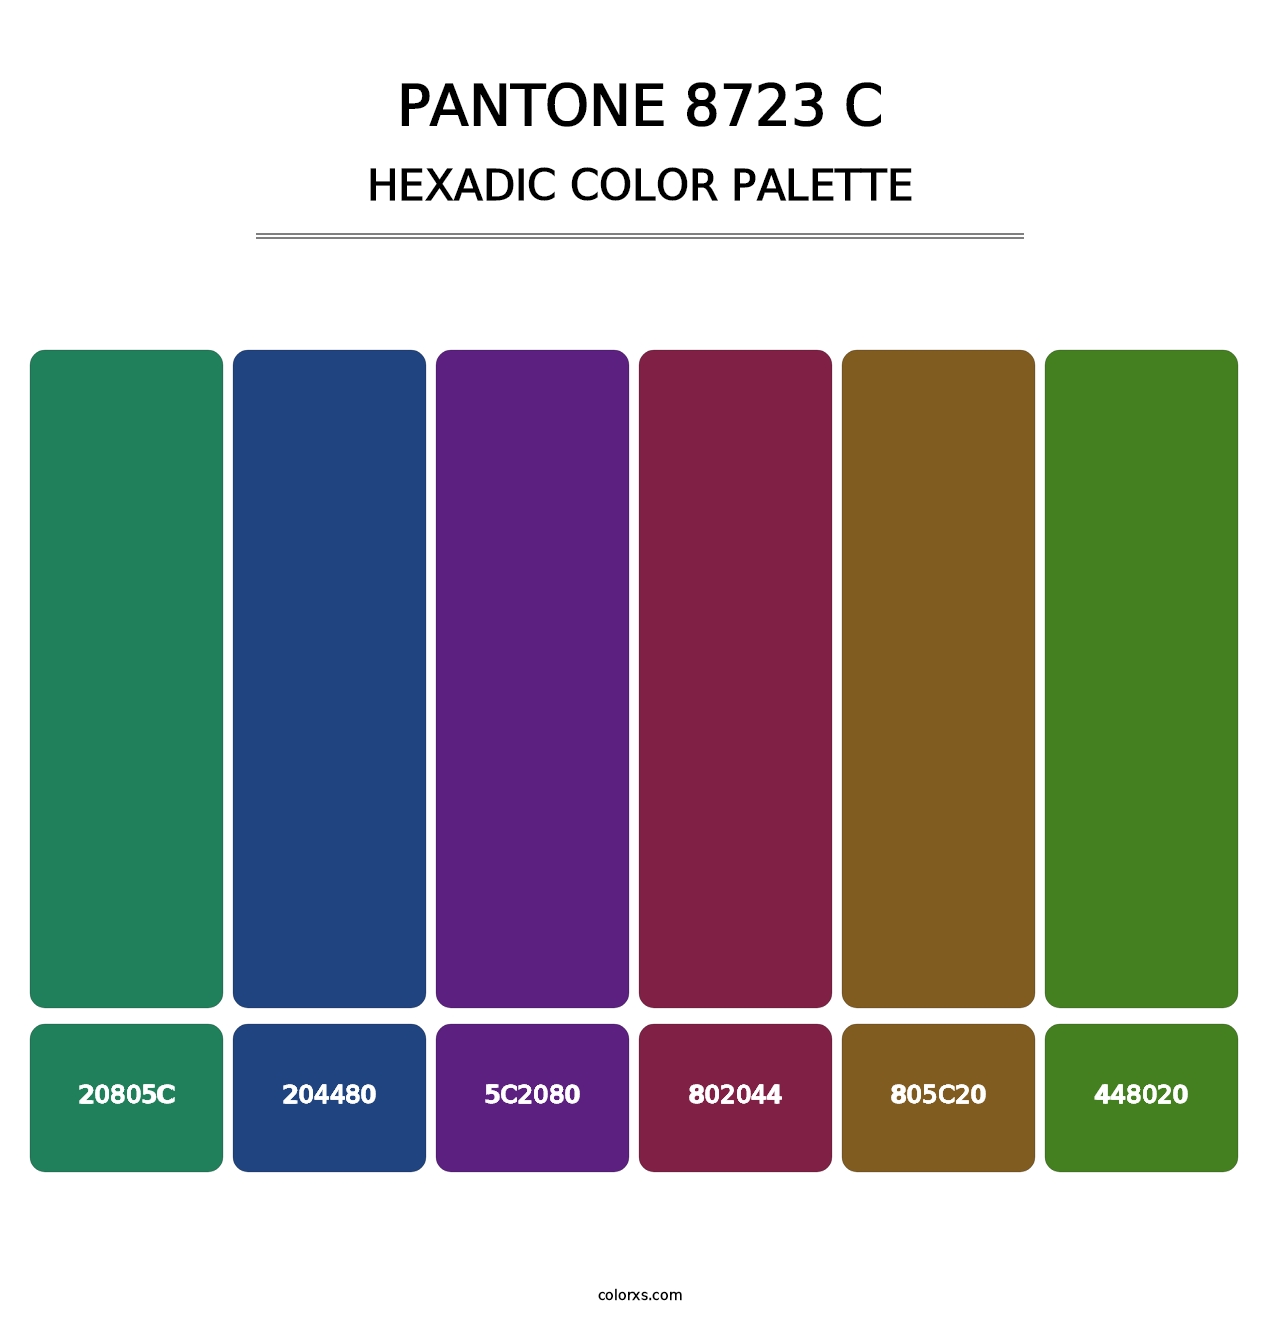 PANTONE 8723 C - Hexadic Color Palette